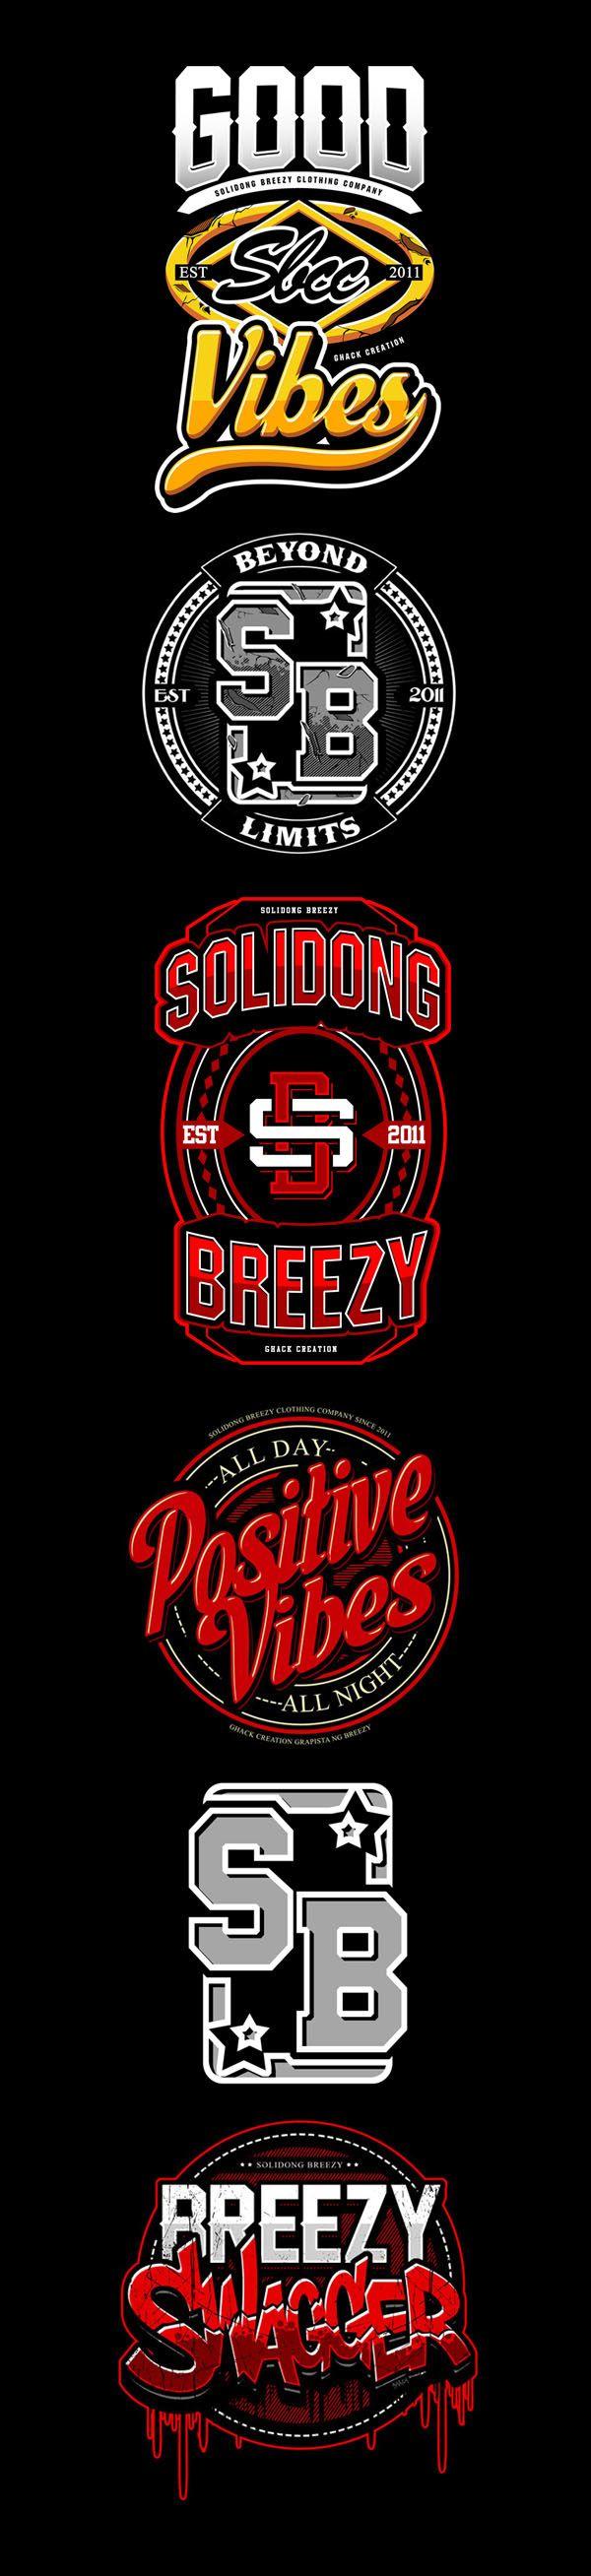 Breezy Logo - Solidong Breezy Logo 2013